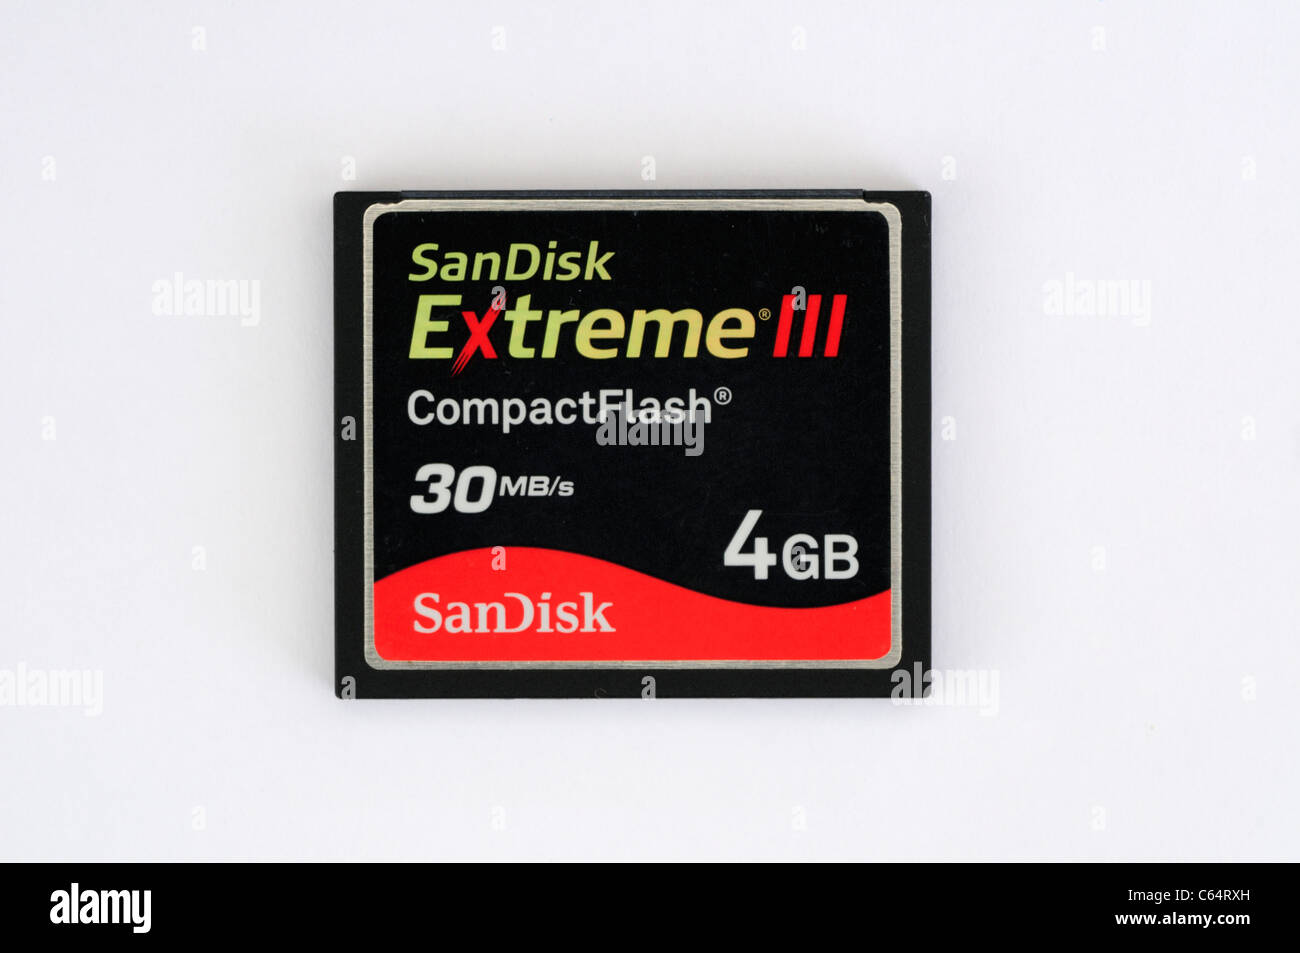 SanDisk Extreme III CF Compact Flash Memory Card Stock Photo